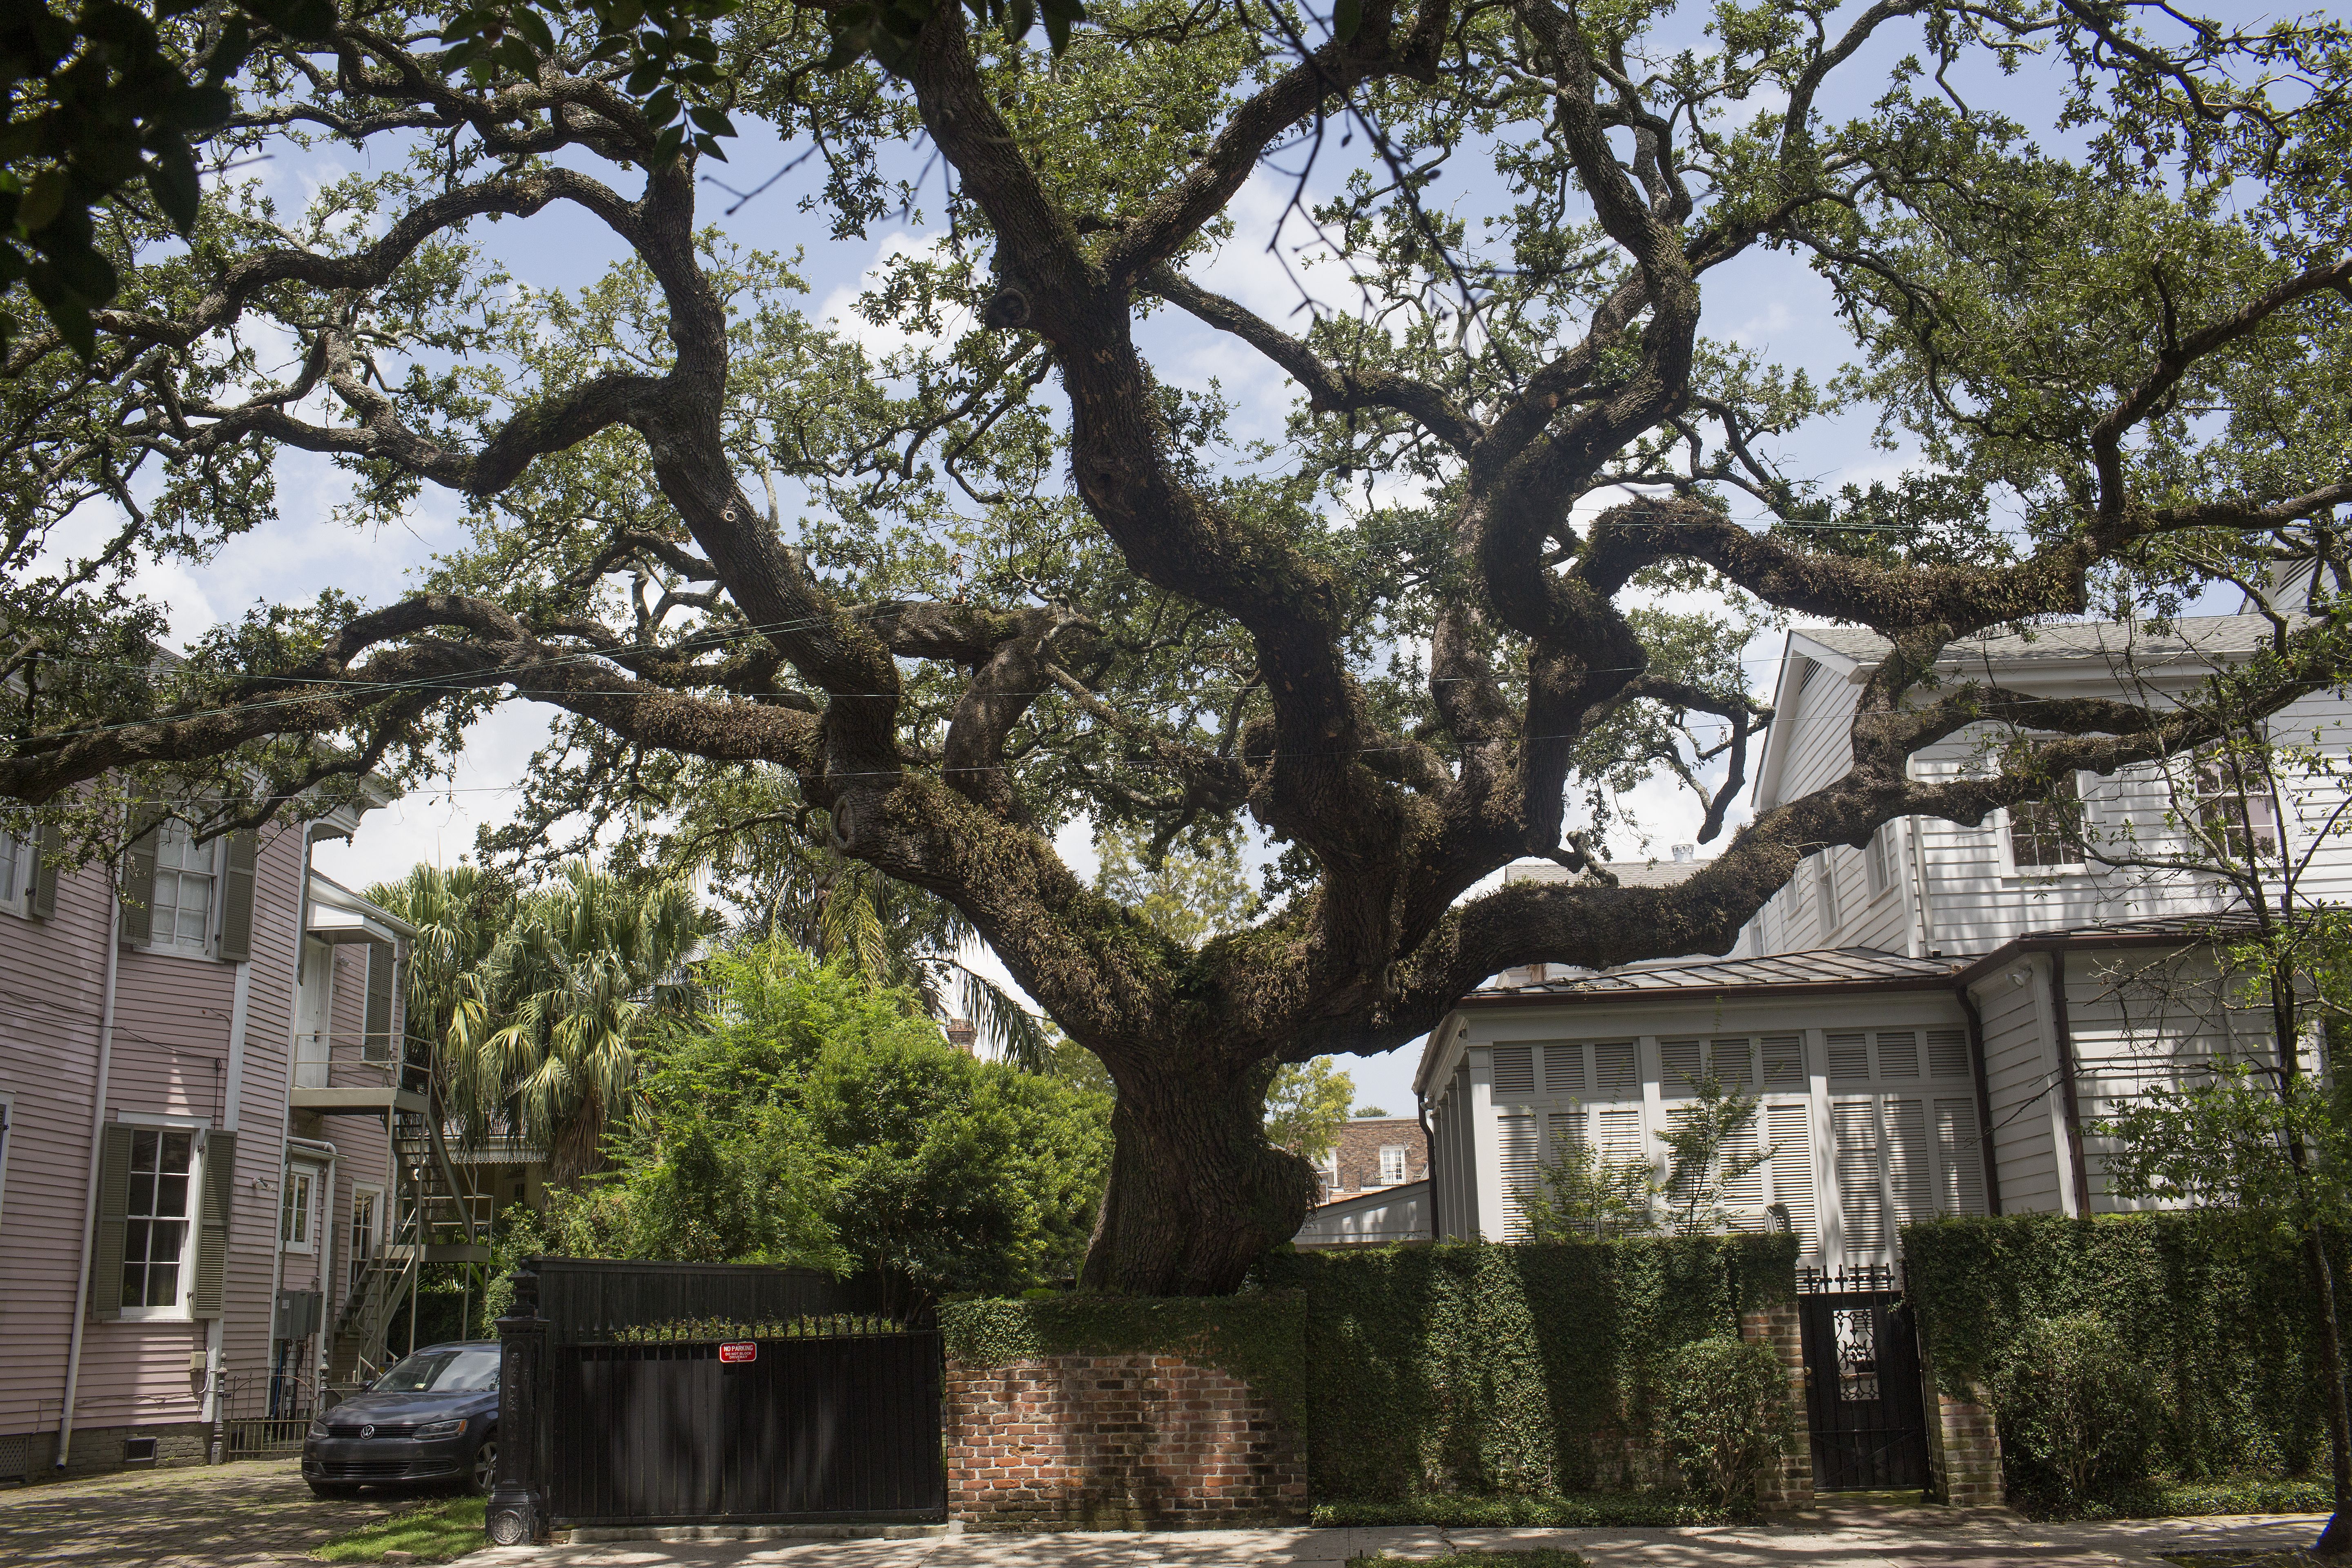 Photo shows a live oak tree in a neighborhood